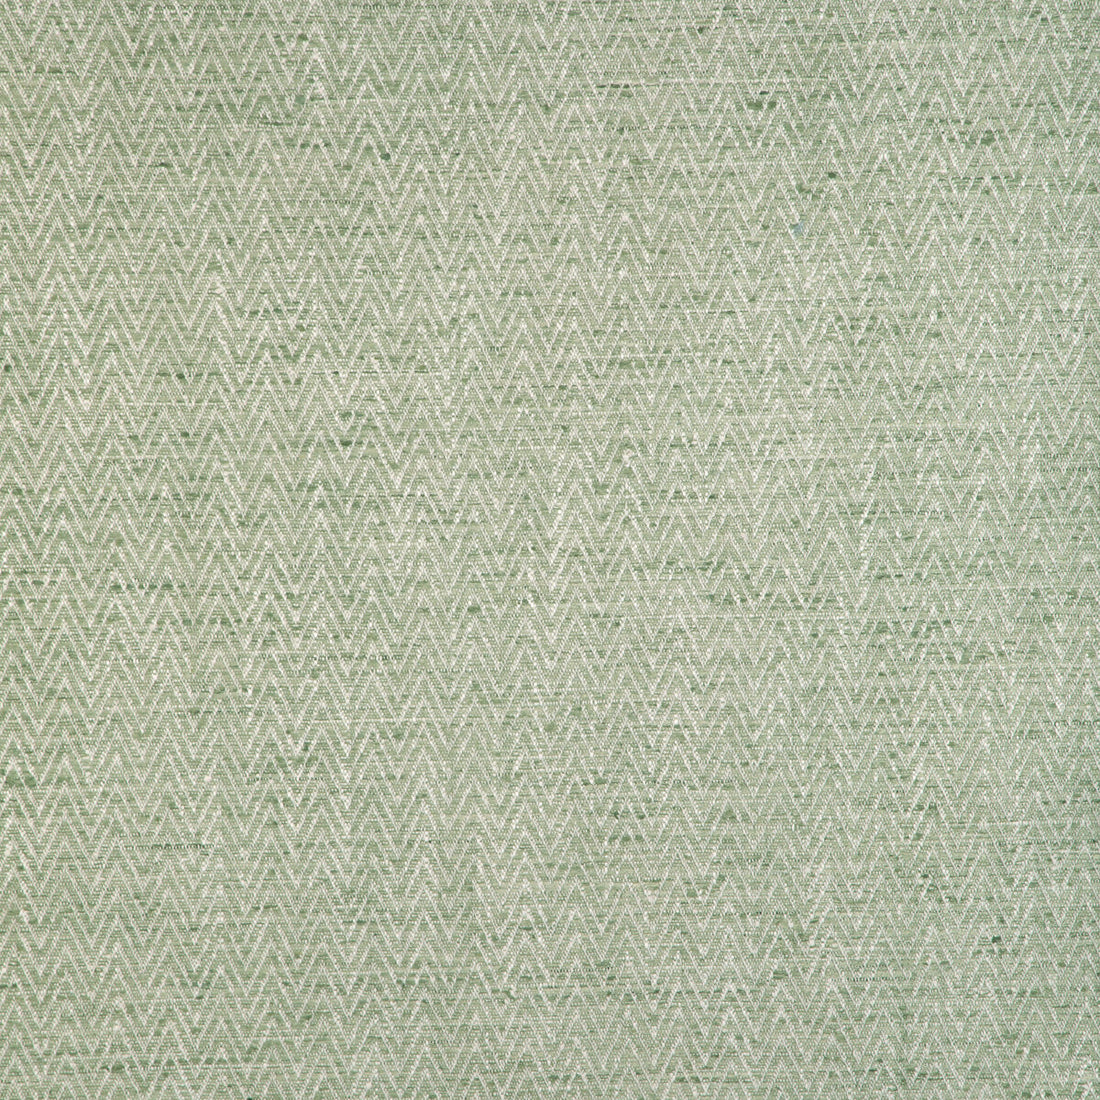 Kravet Smart fabric in 34092-130 color - pattern 34092.130.0 - by Kravet Smart